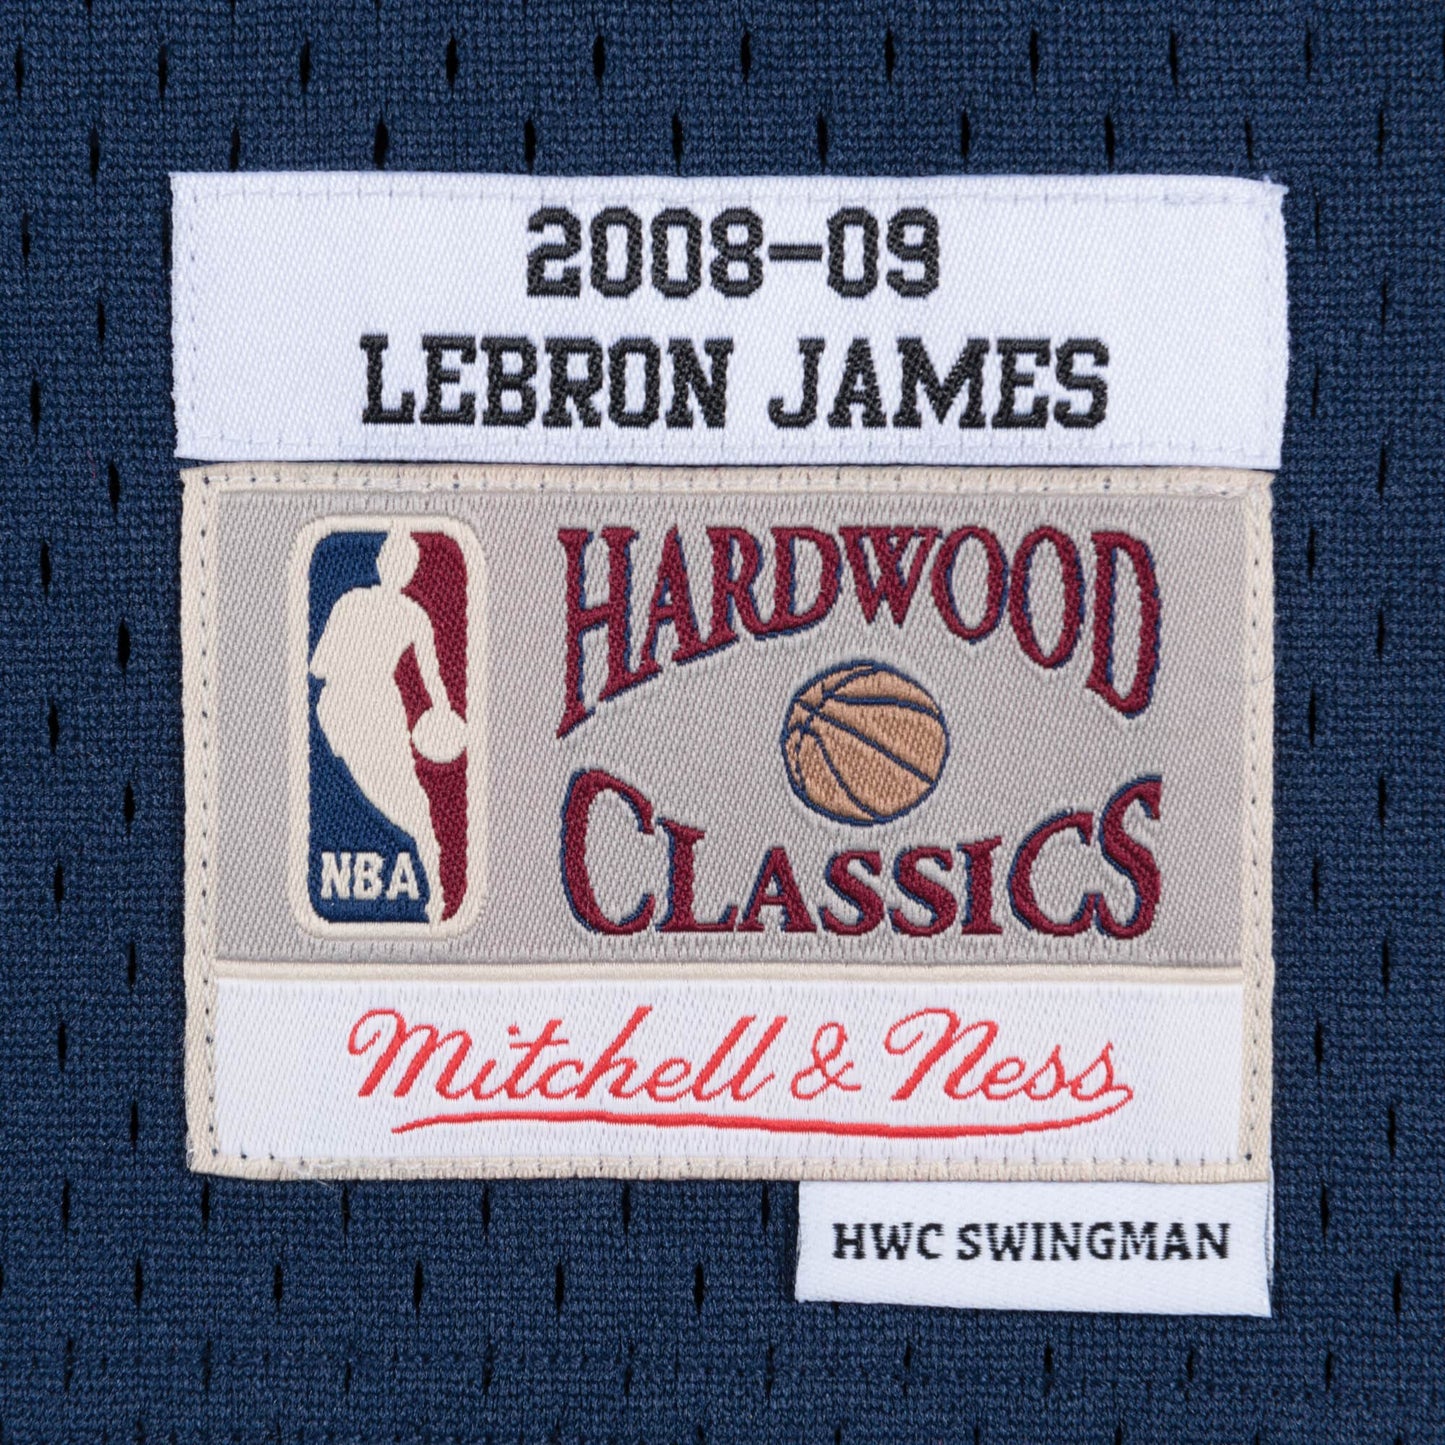 NBA Swingman Alternate Jersey Cleveland Cavaliers 2008-09 Lebron James